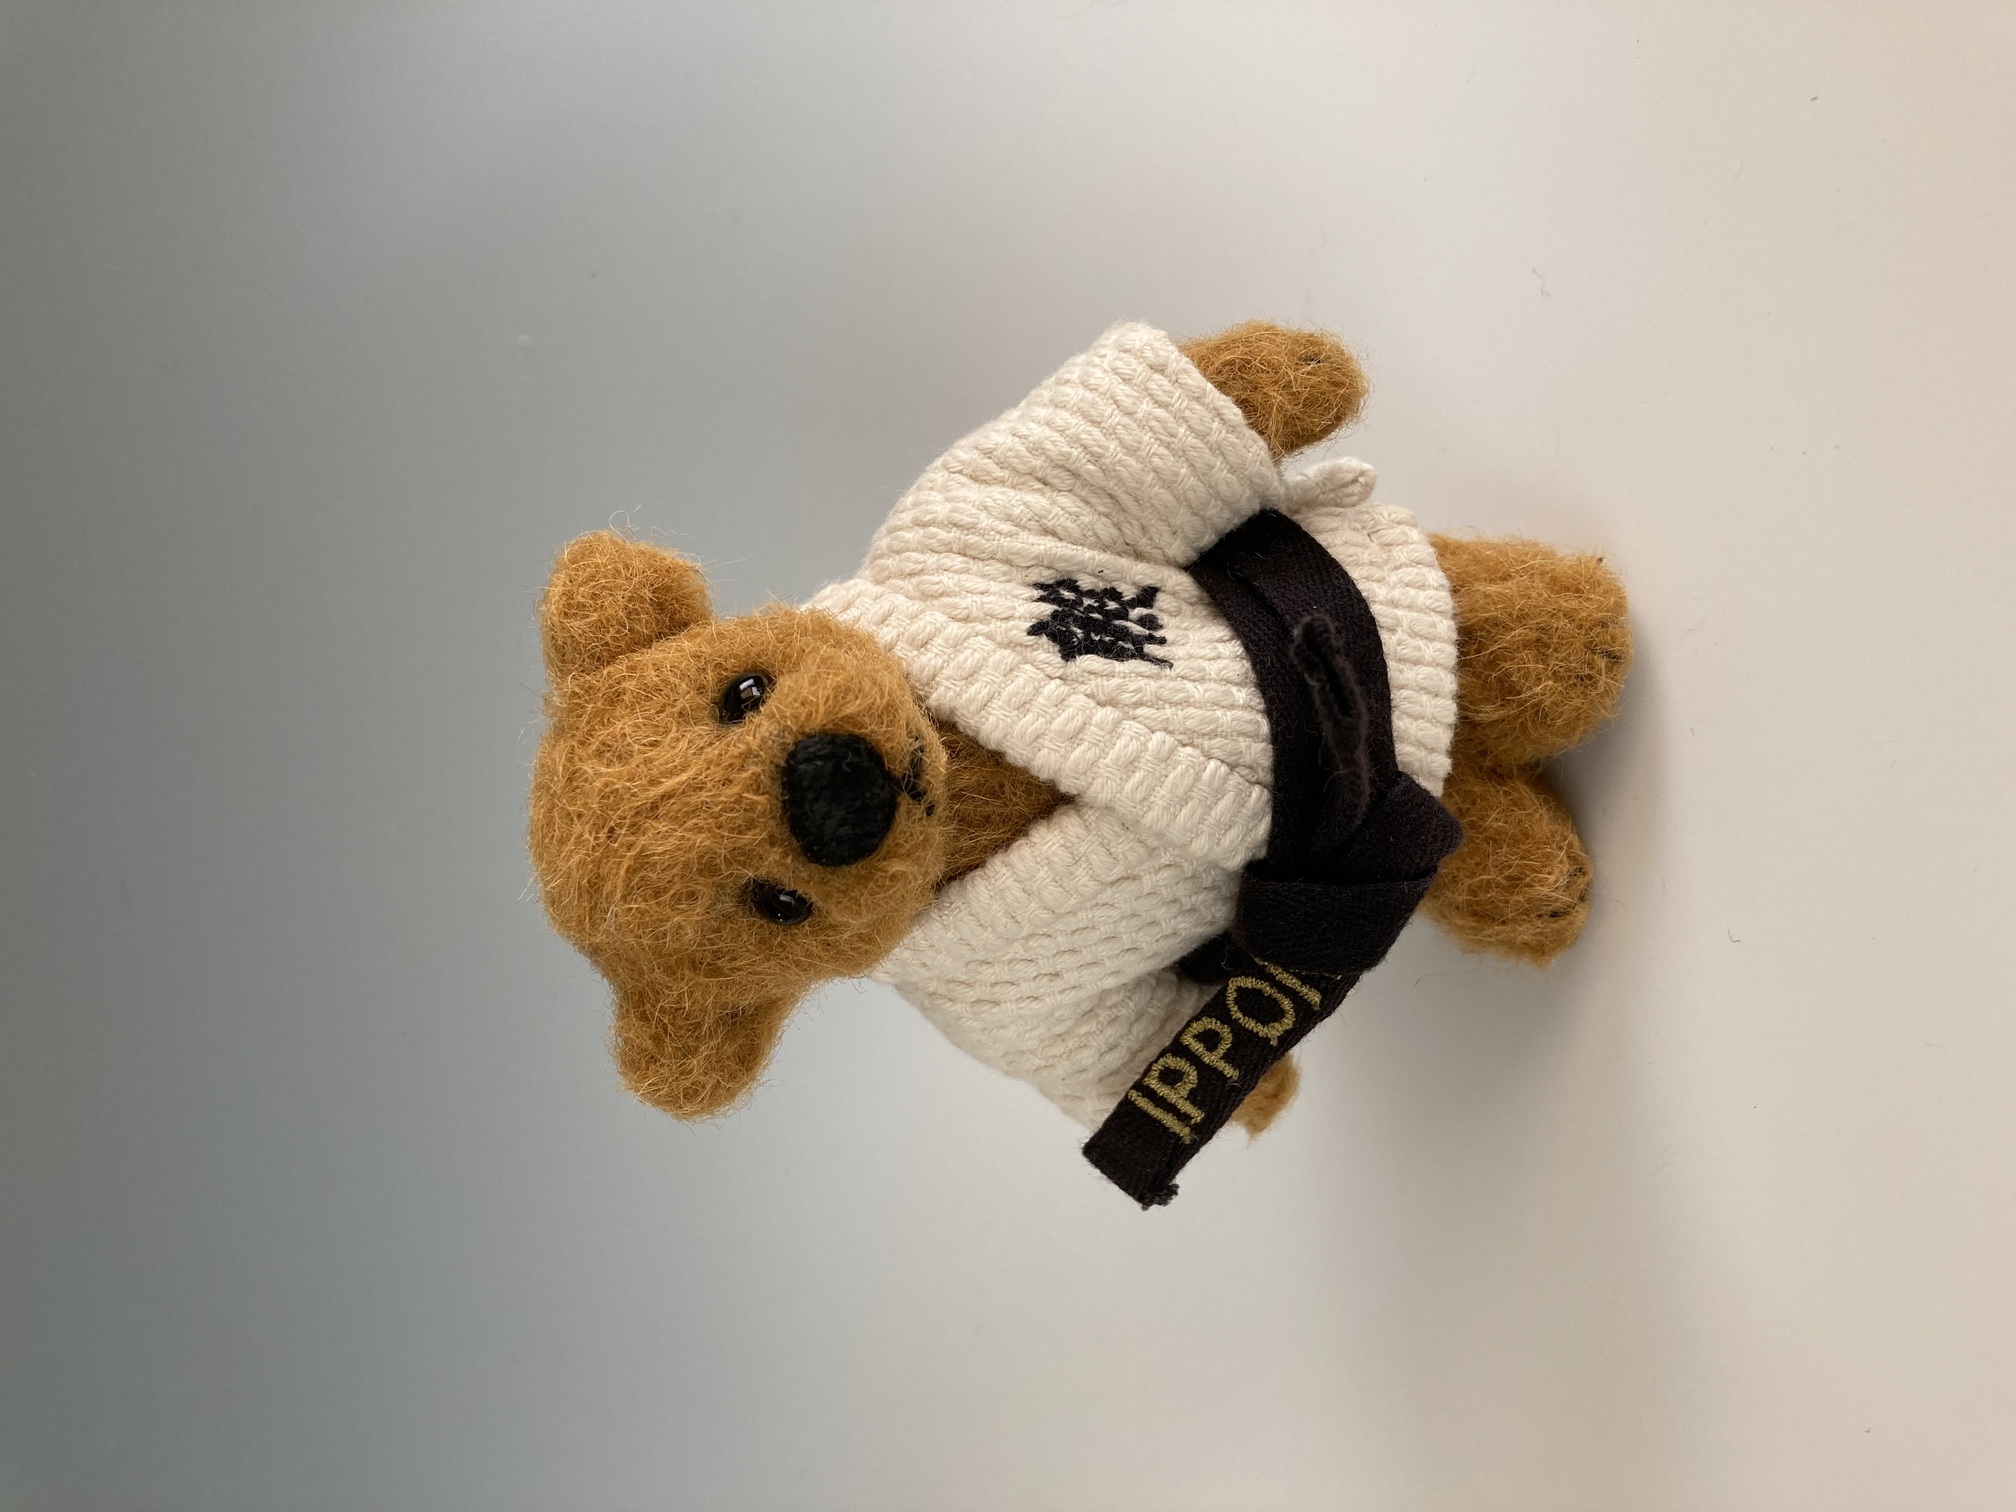 Judo kid, 4.7 inchies bear made from alpaca, wearing judogi.